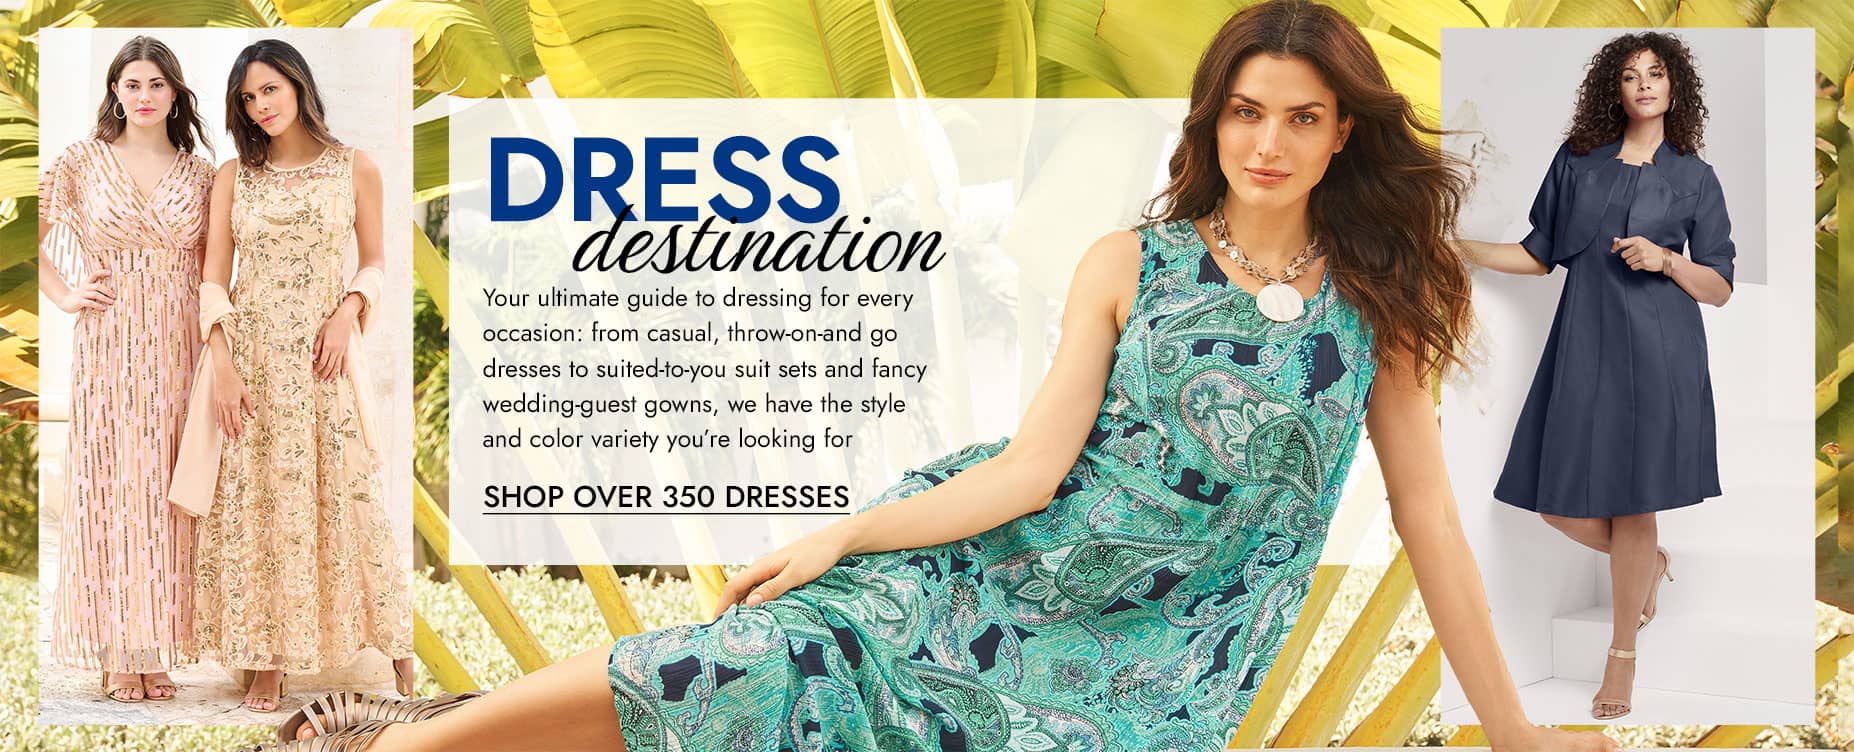 Dress destination shop over 350 dresses